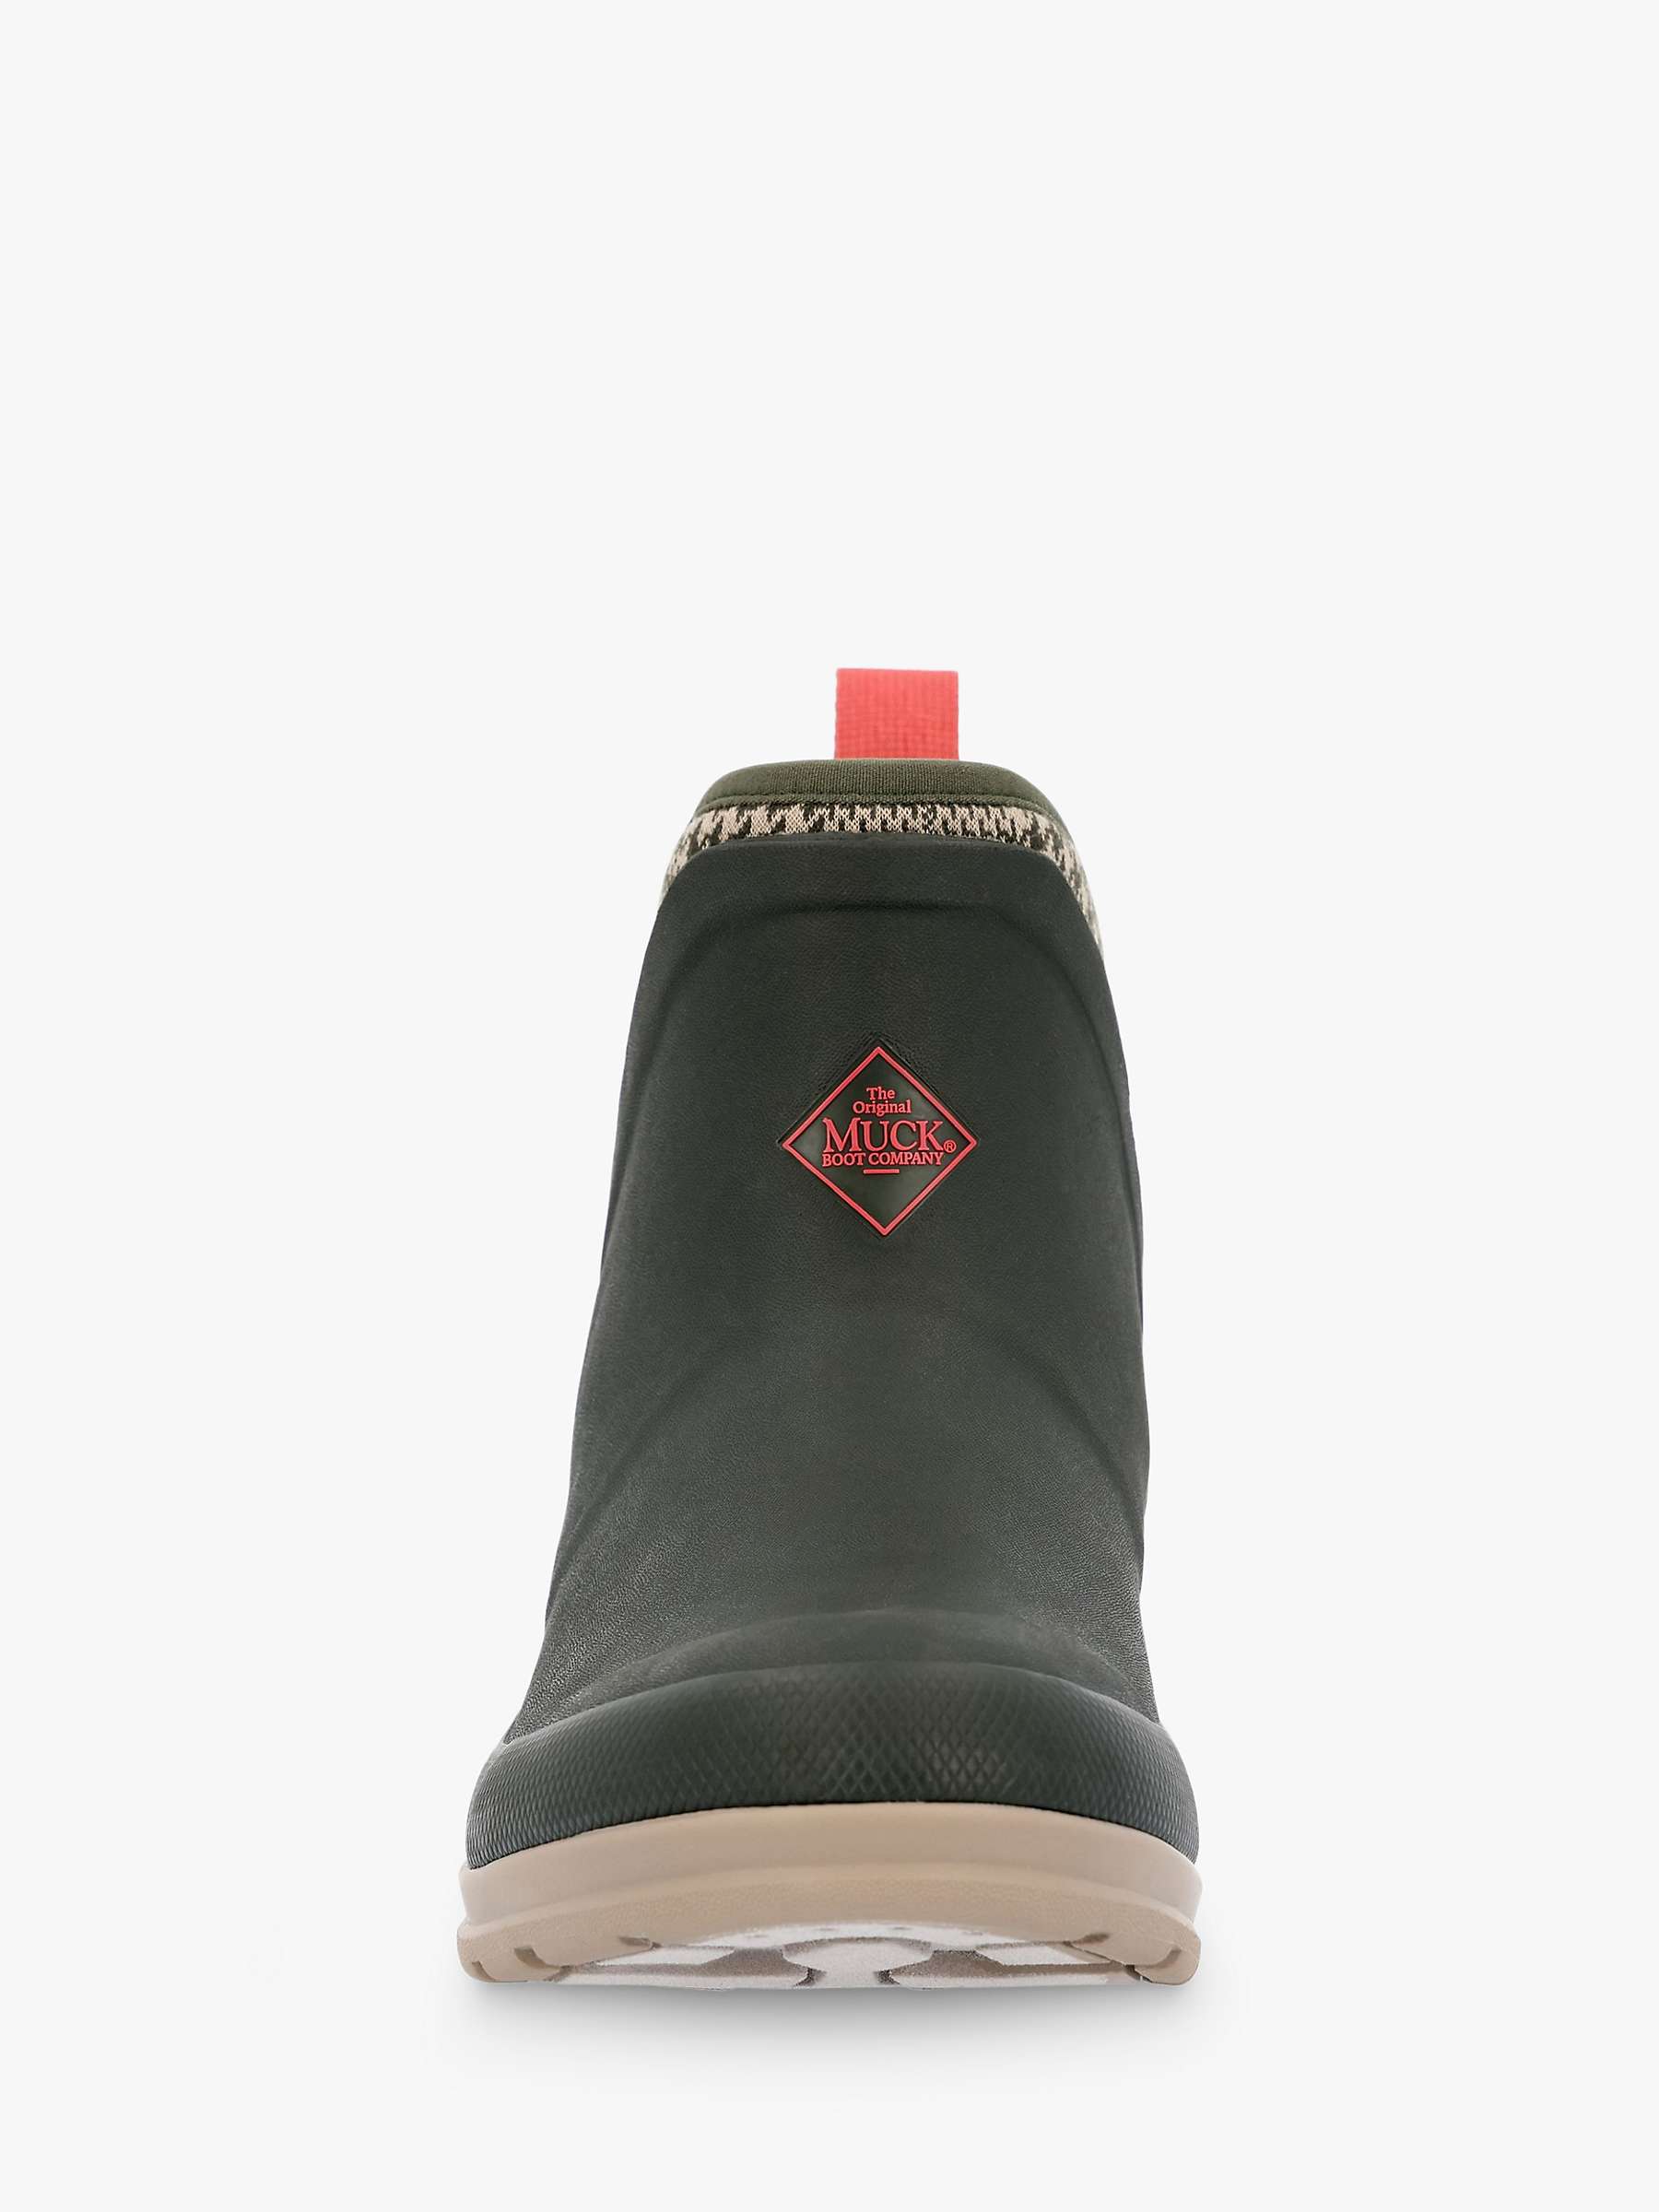 Buy Muck Originals Ankle Wellington Boots Online at johnlewis.com